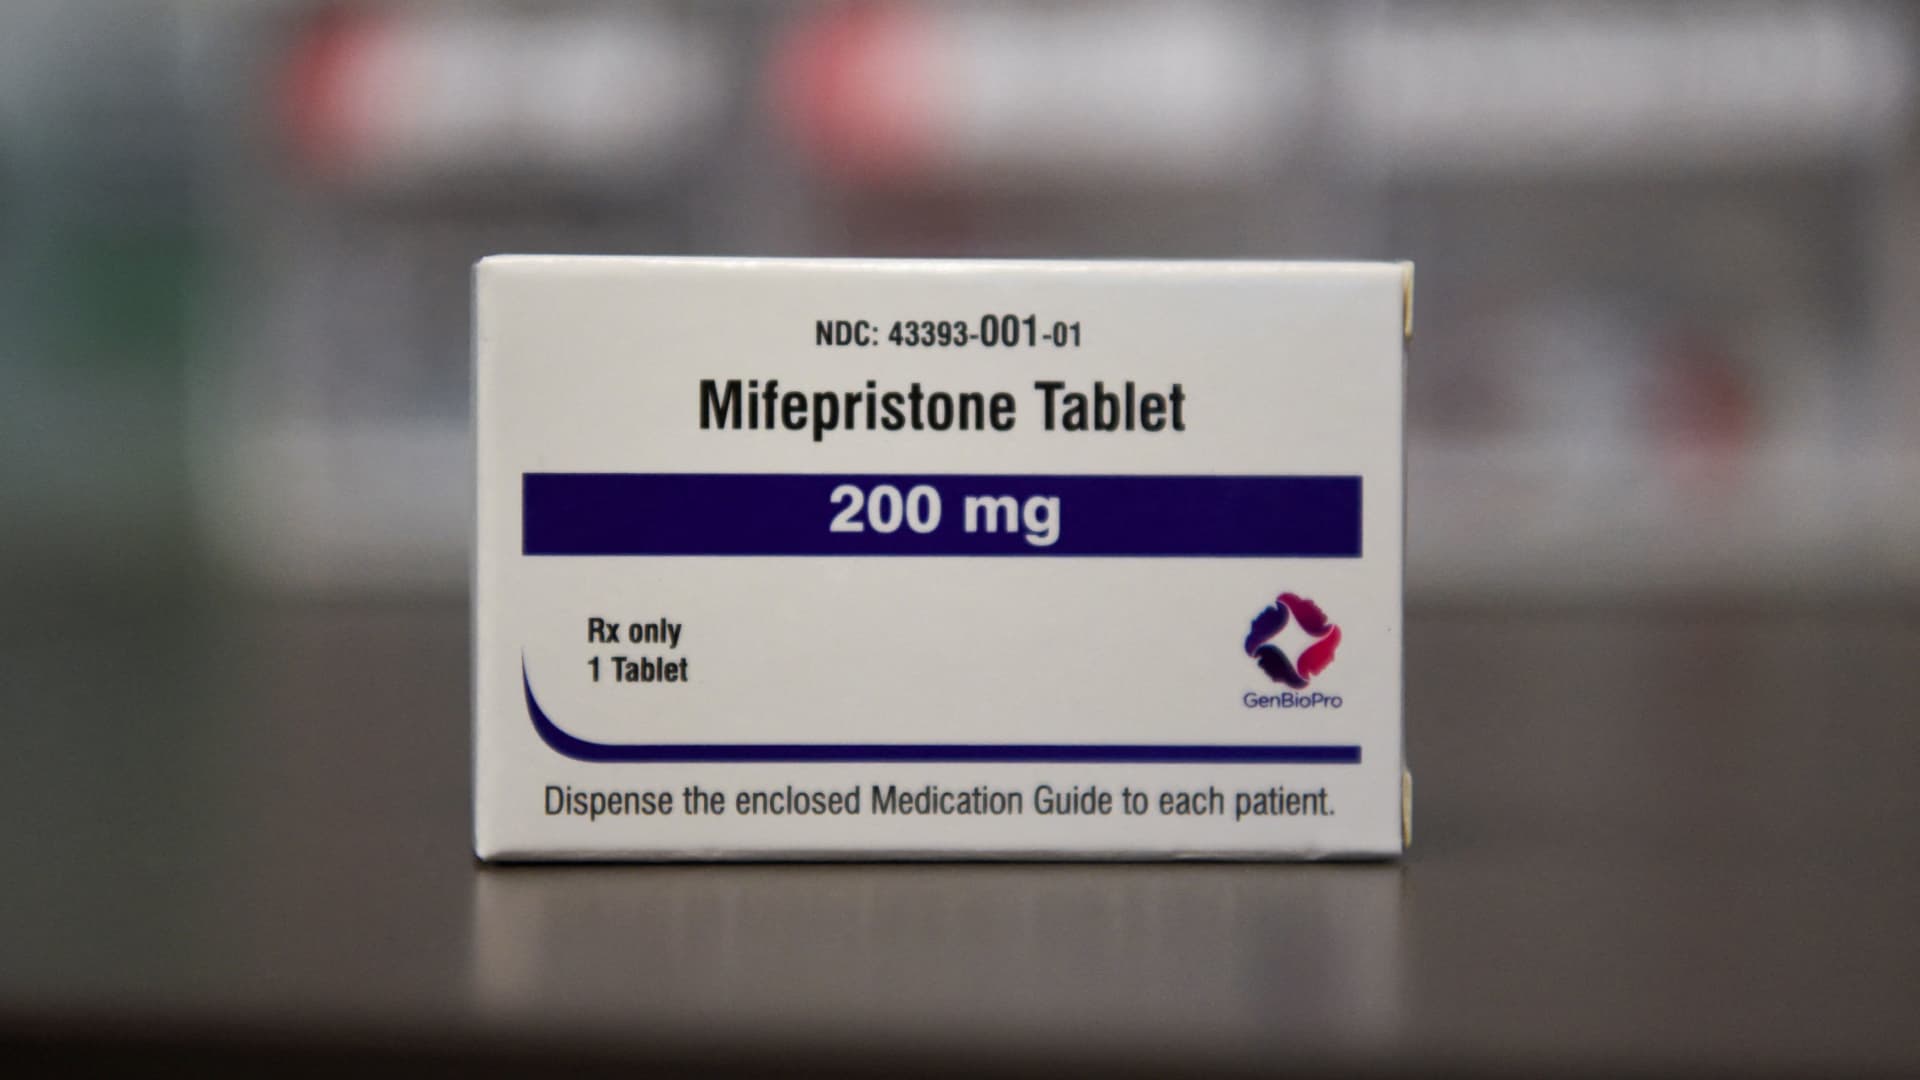 Abortion pill company GenBioPro asks U.S. court to keep generic mifepristone on market